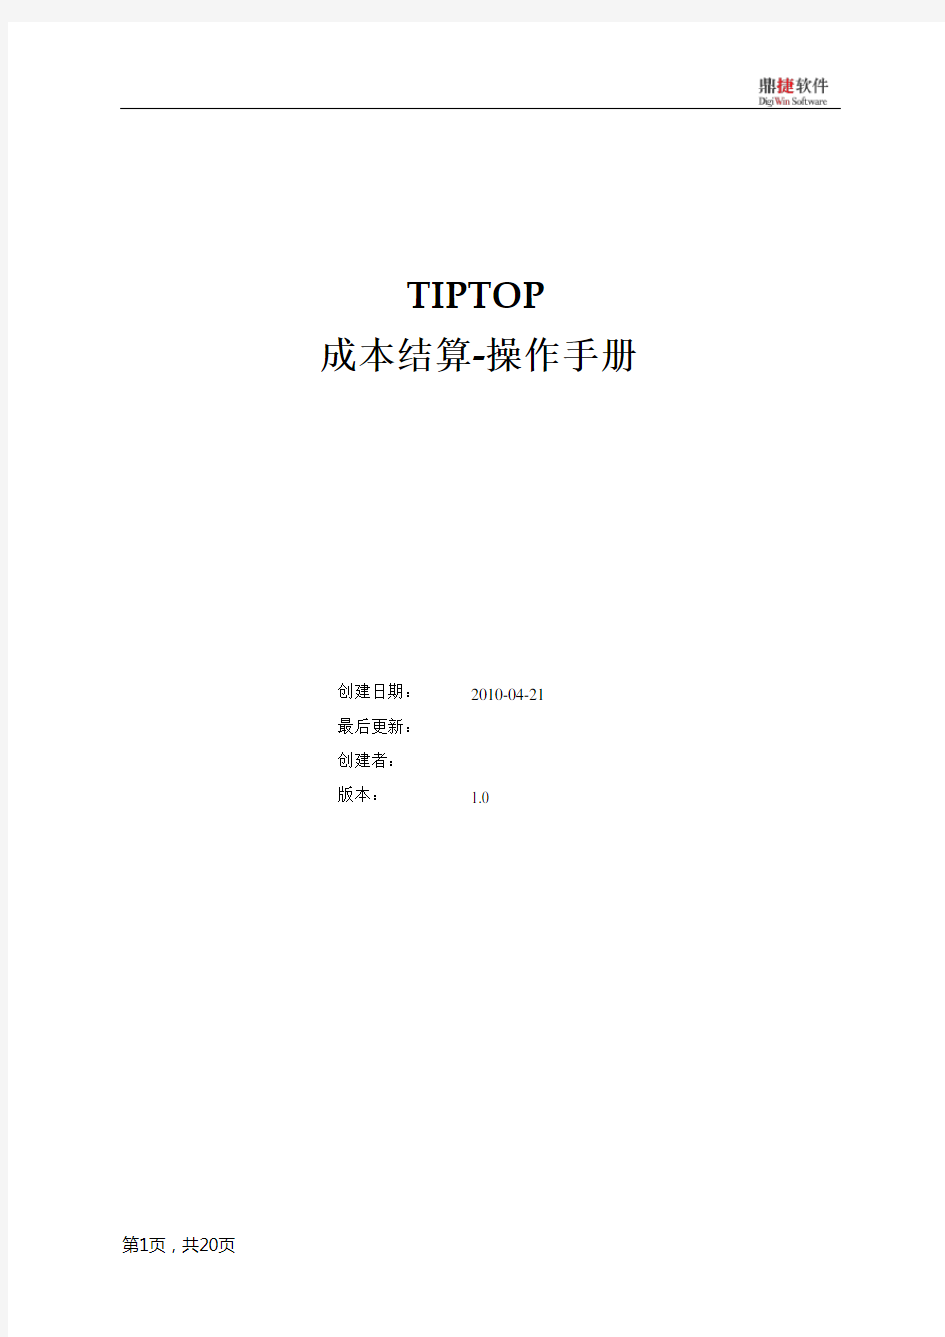 Tiptop成本结算-操作手册-V1.0